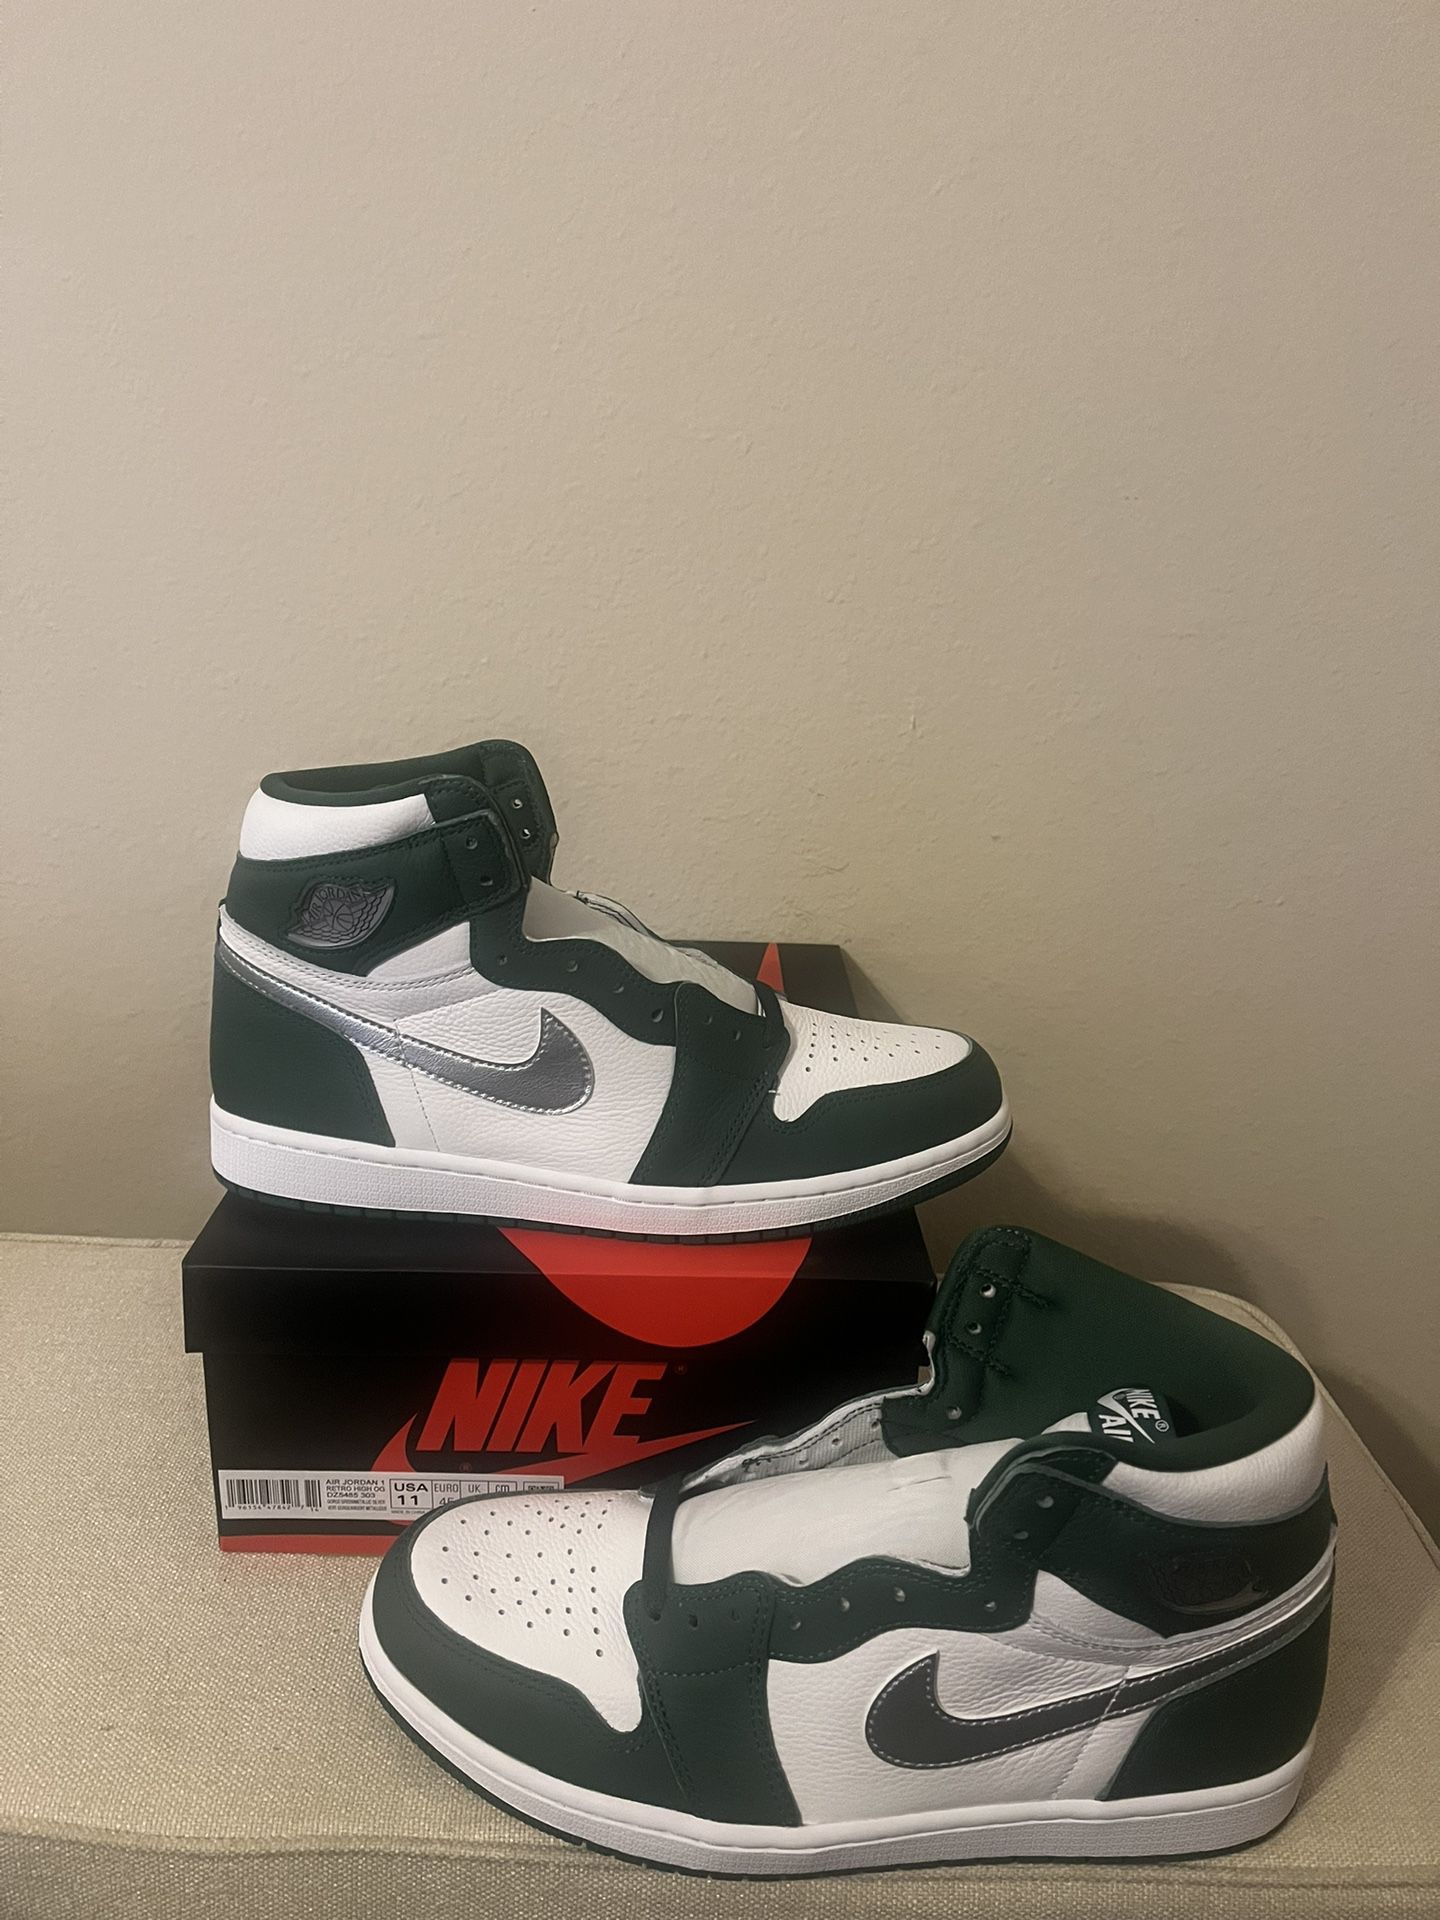 Air Jordan 1 Gorge Green Size 11 